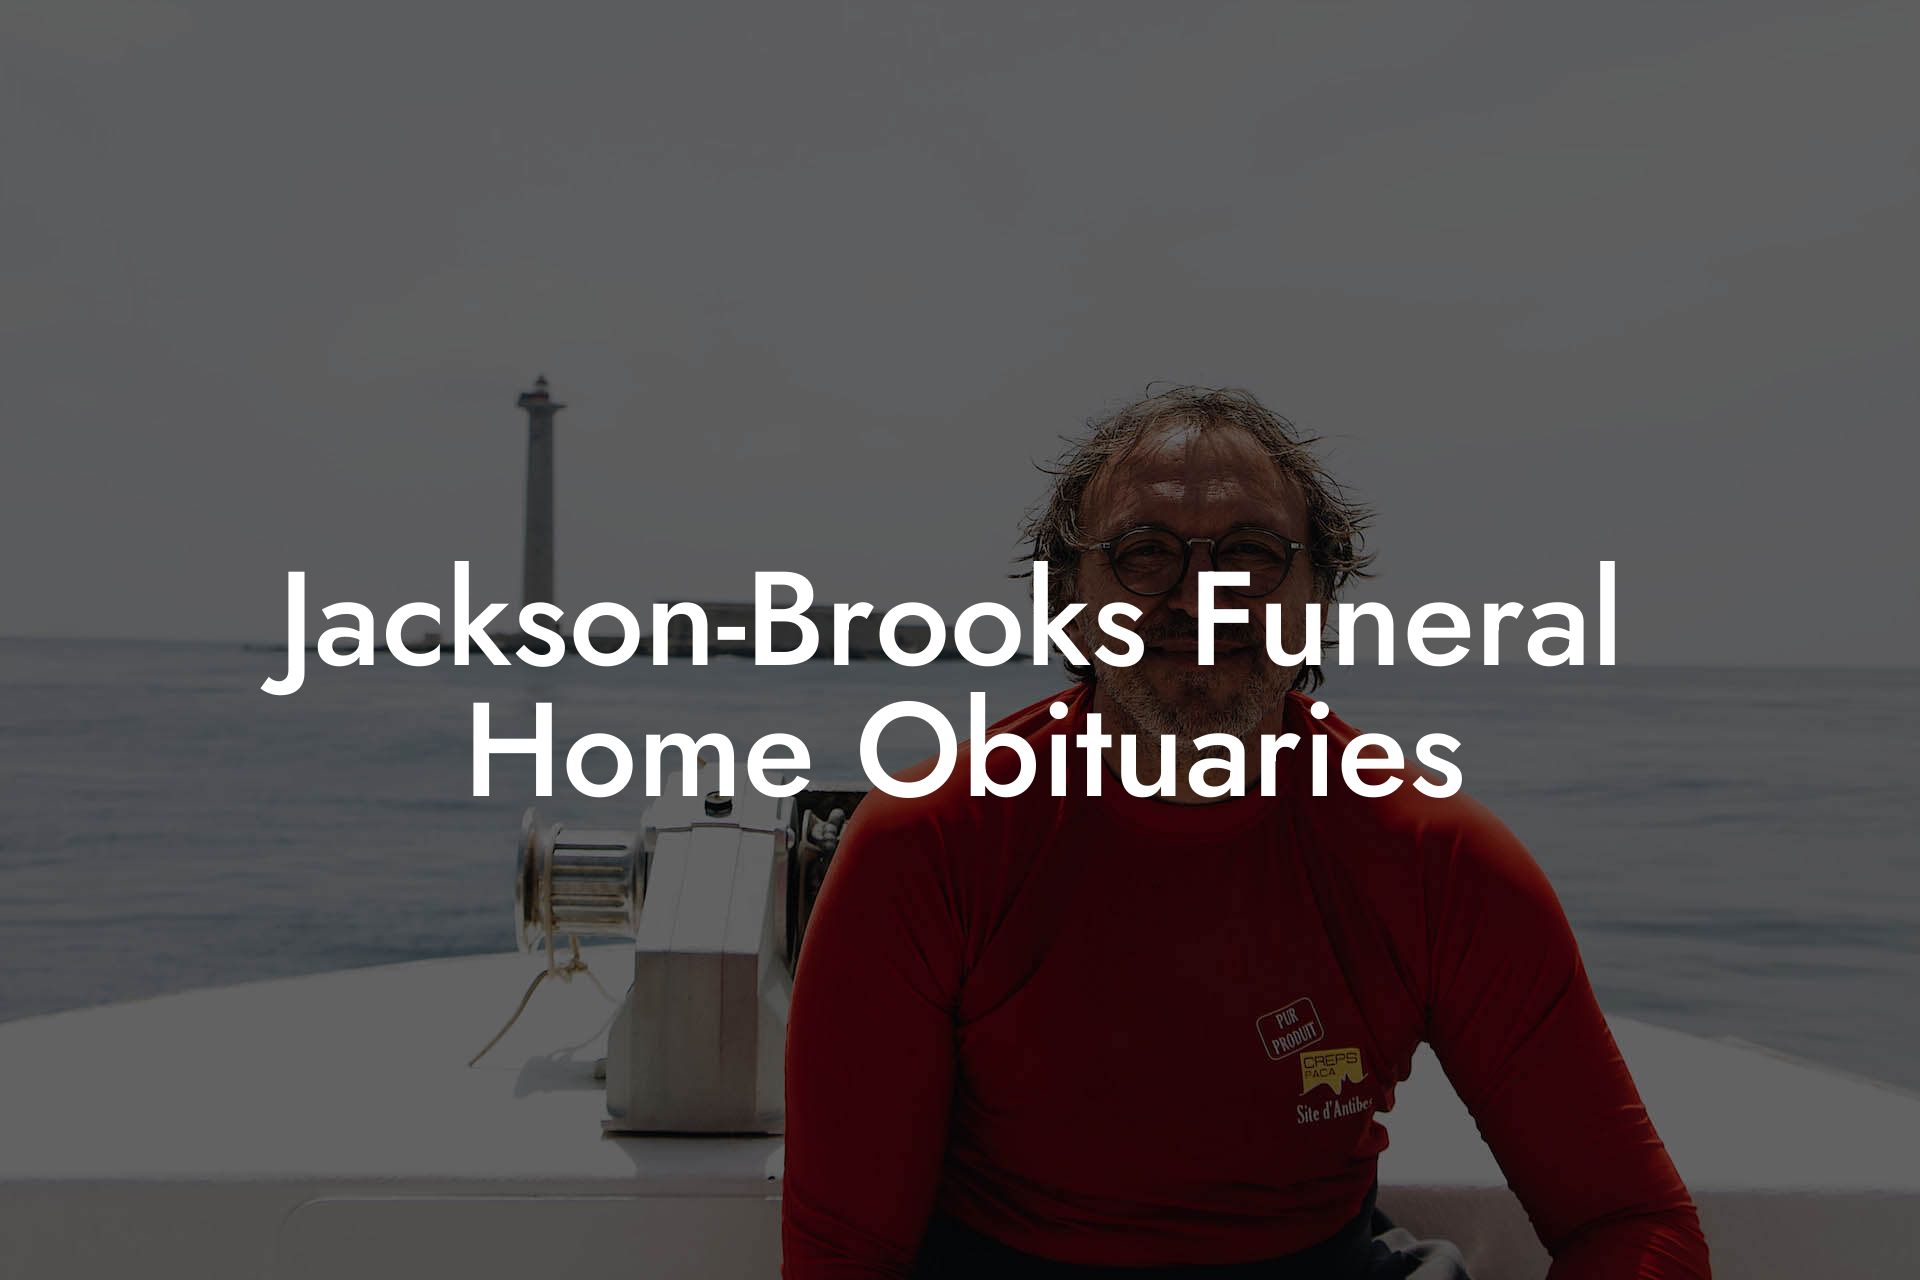 Jackson-Brooks Funeral Home Obituaries